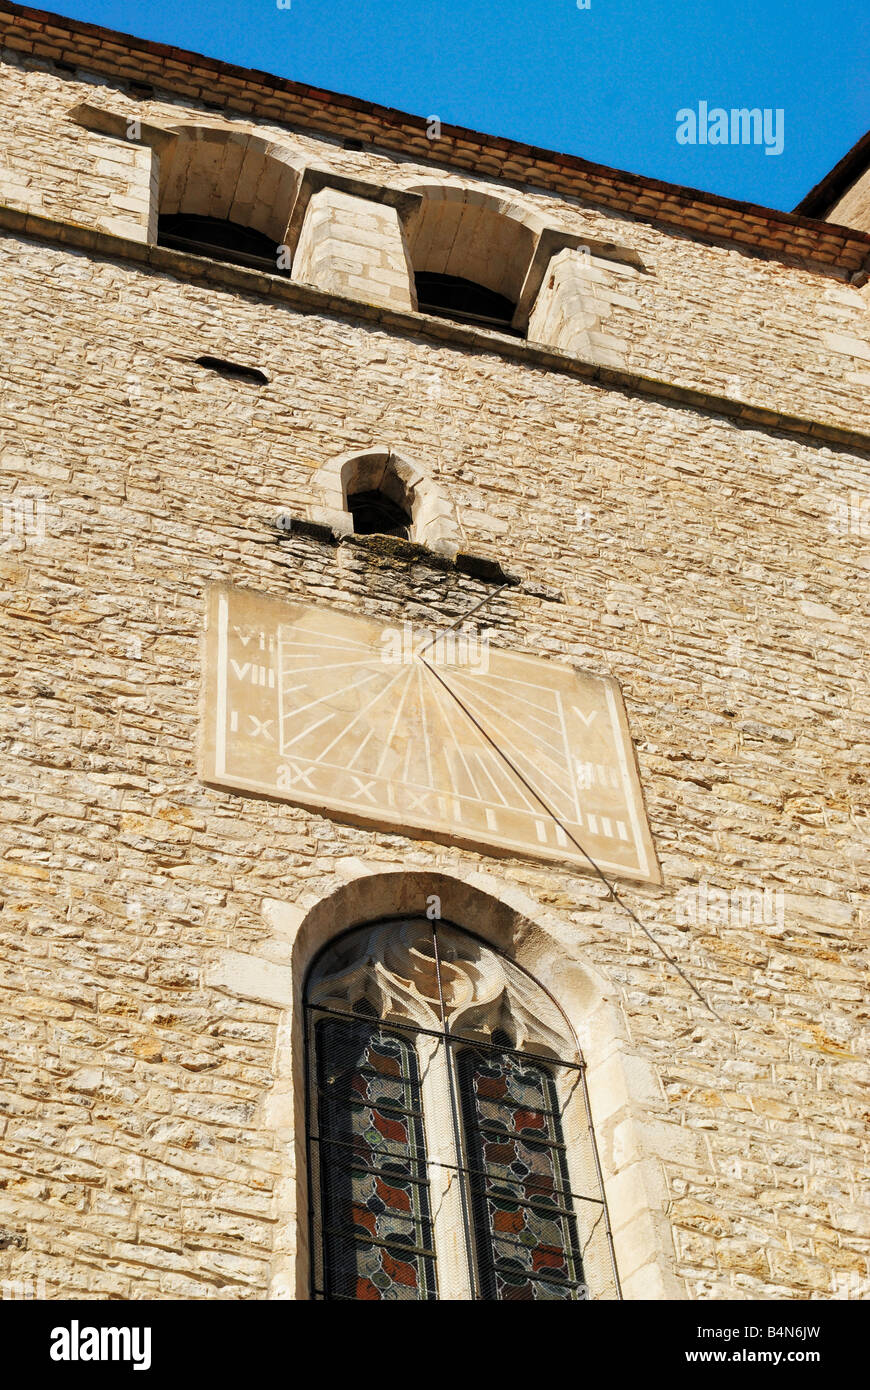 Low angle view of Church with sundial at Saint Cirq Lapopie, Midi Pyrénées, Lot, France Stock Photo